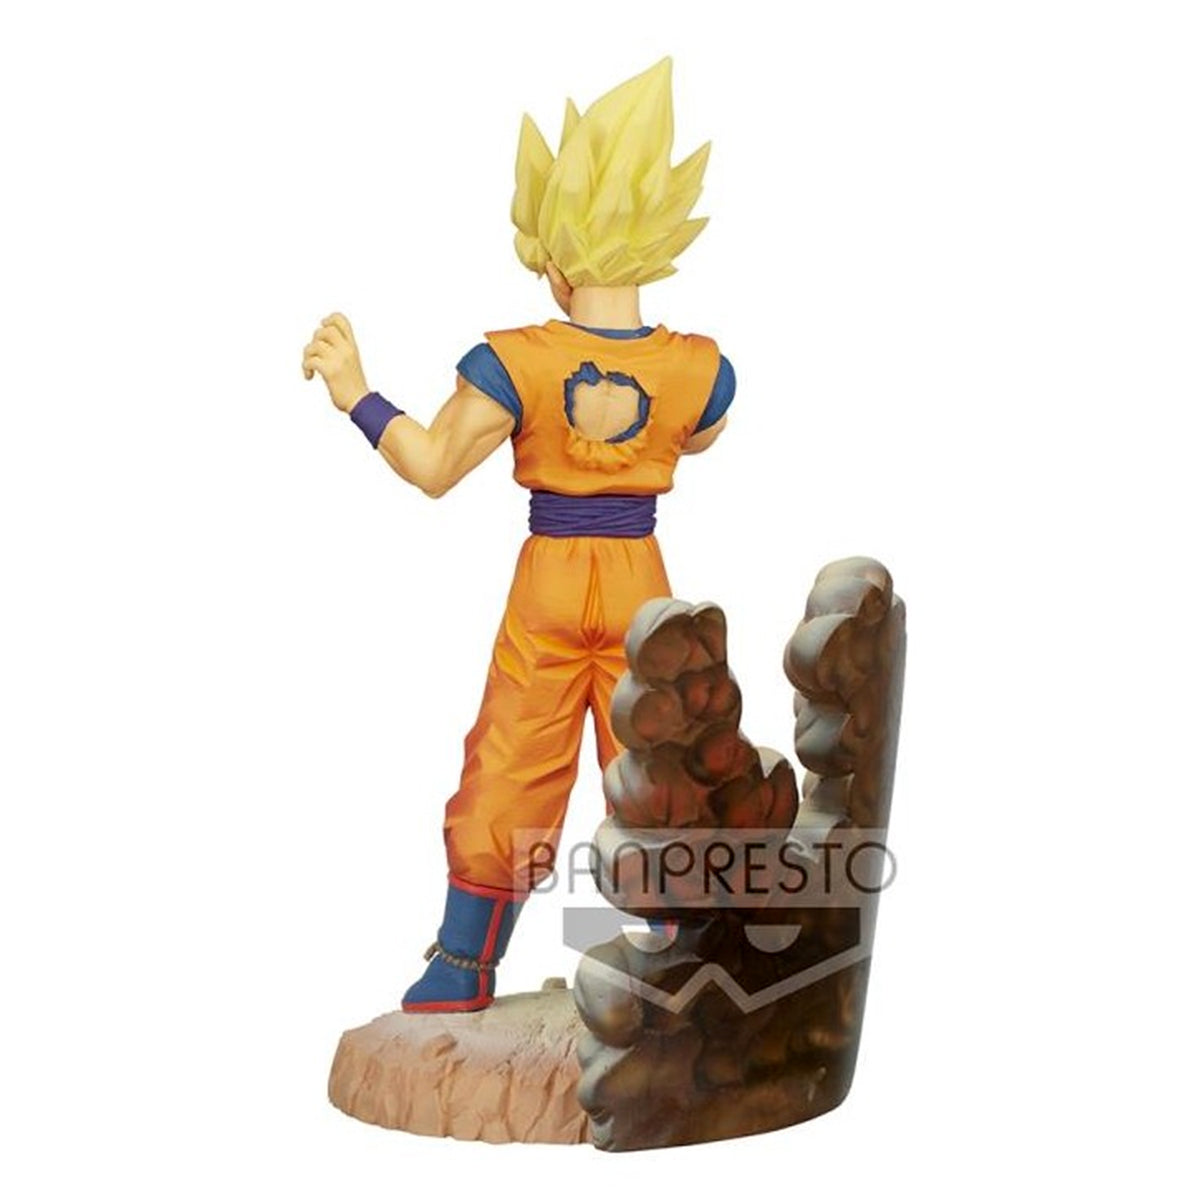 Figura Banpresto DBZ History Box Super Saiyan Son Goku (vol. 2)